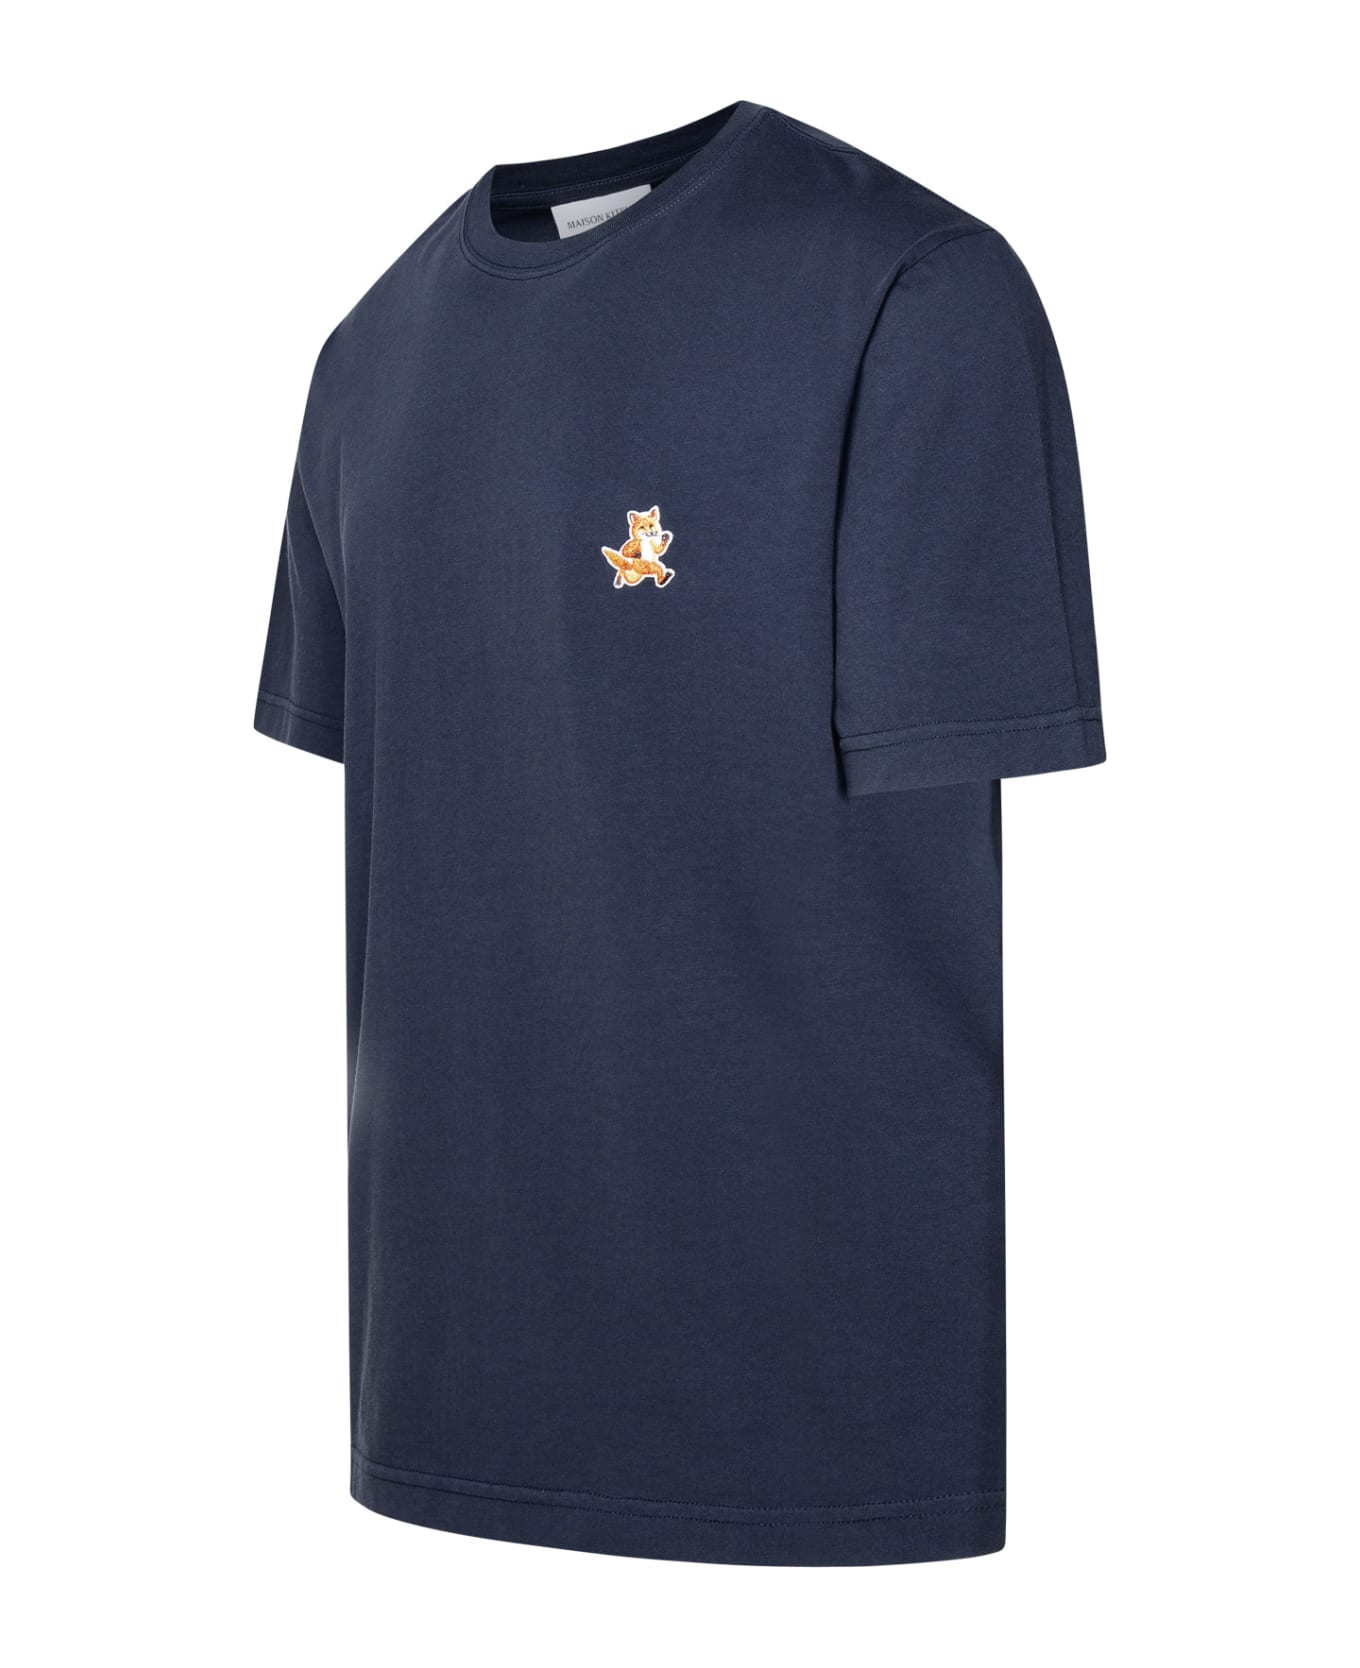 Maison Kitsuné Navy Cotton T-shirt - Navy シャツ